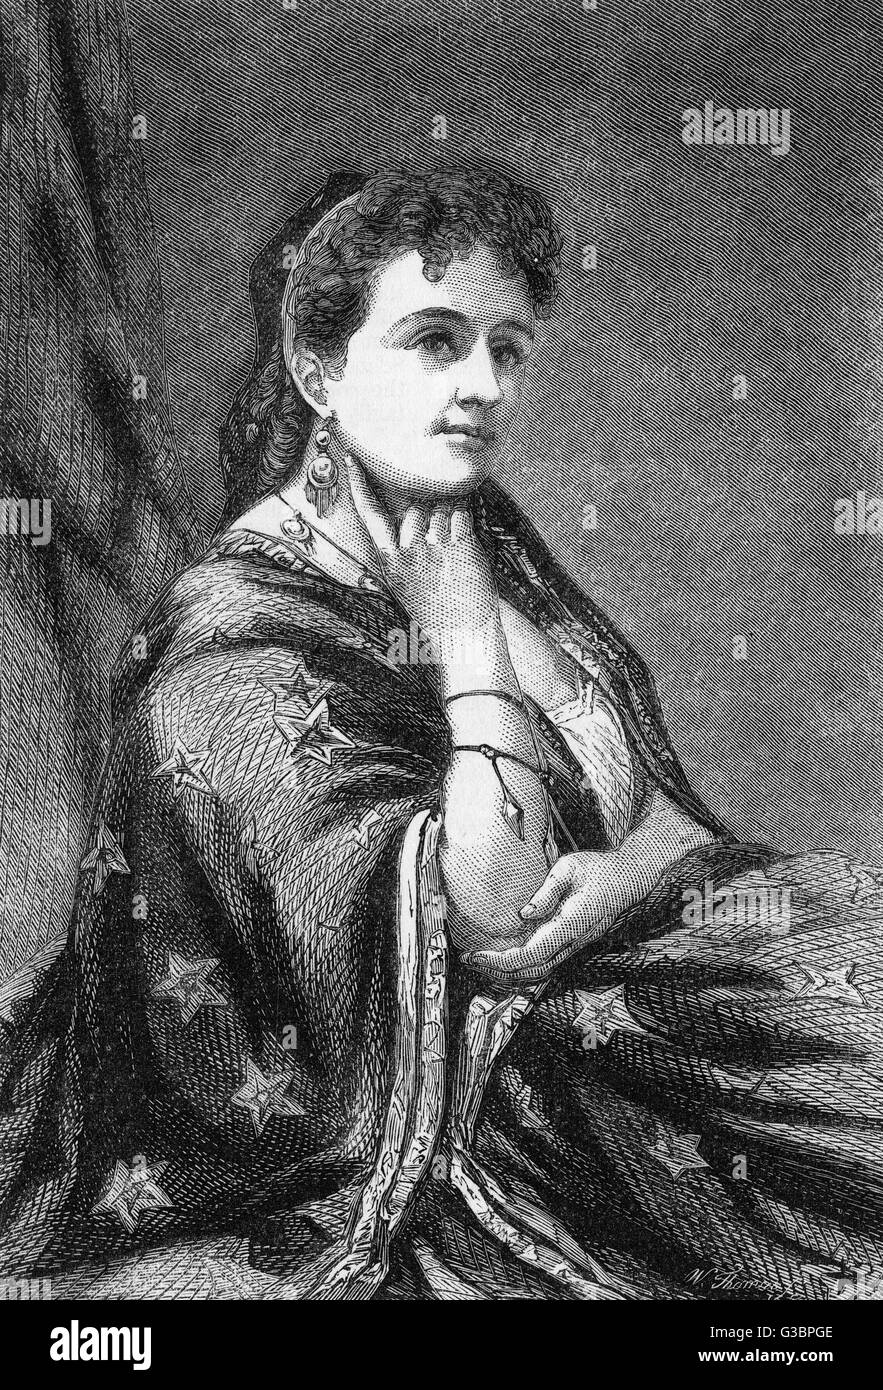 A HORTENSE SCHNEIDER cantante francés Fecha: 1838 - 1920 Foto de stock